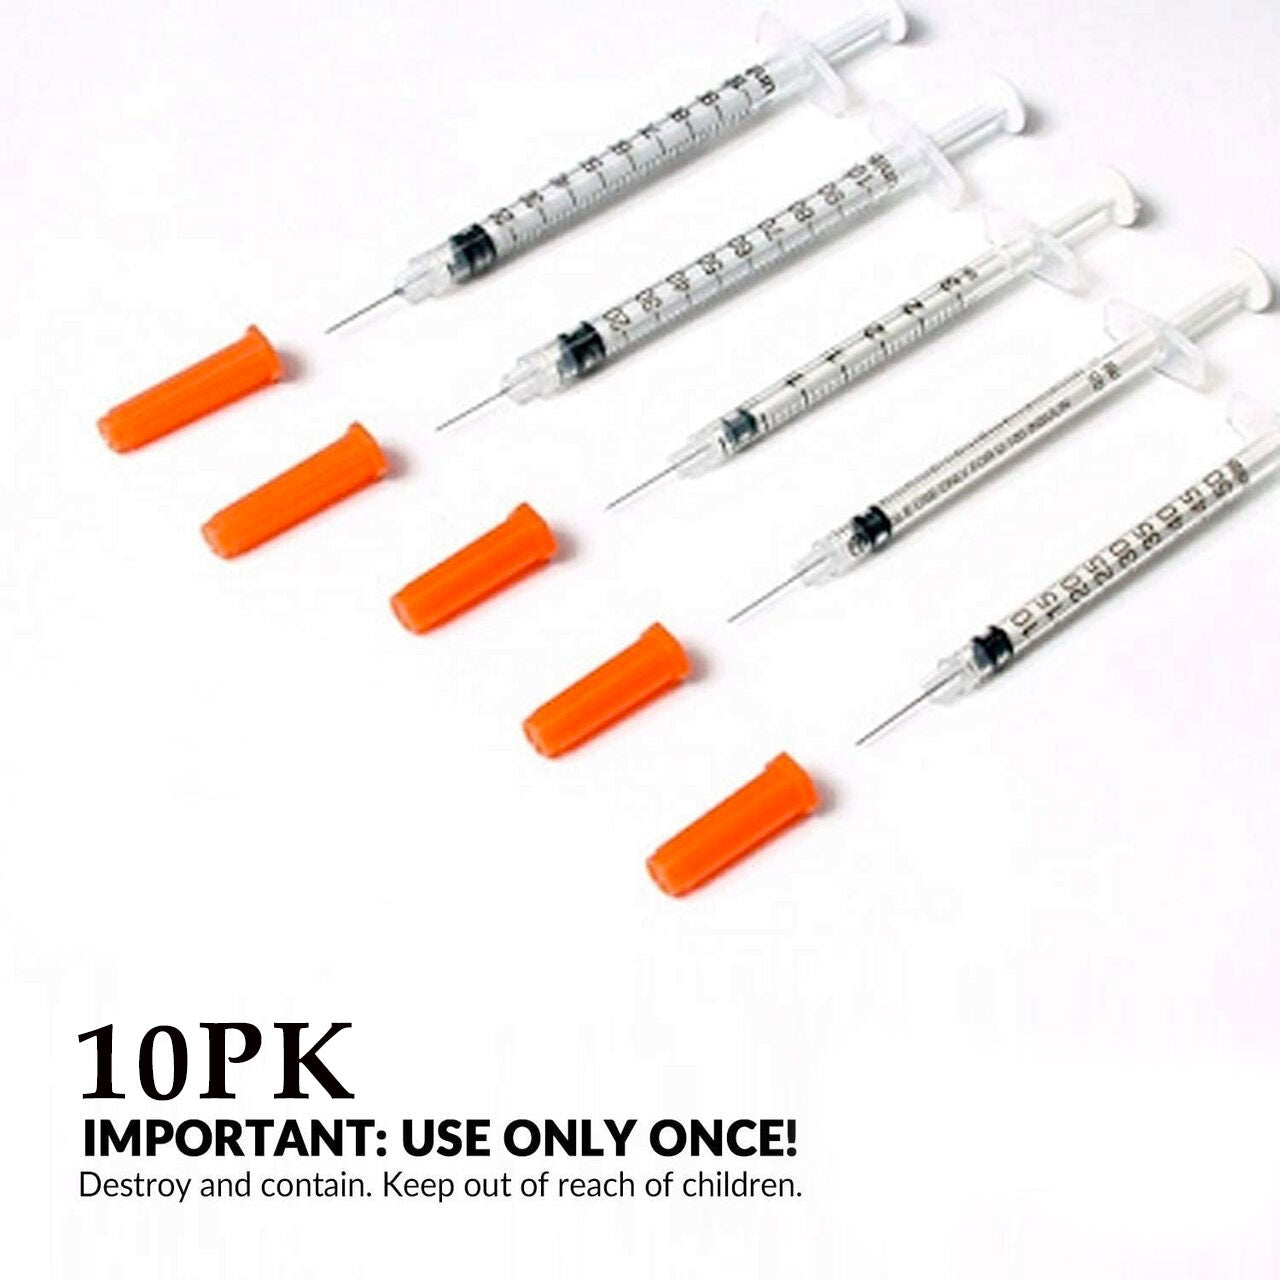 10pcs EasyTouch Insulin Syringes 1cc (1ml) x 30G x 1/2" - 1 BAG (10 SYRINGES) by MHC.